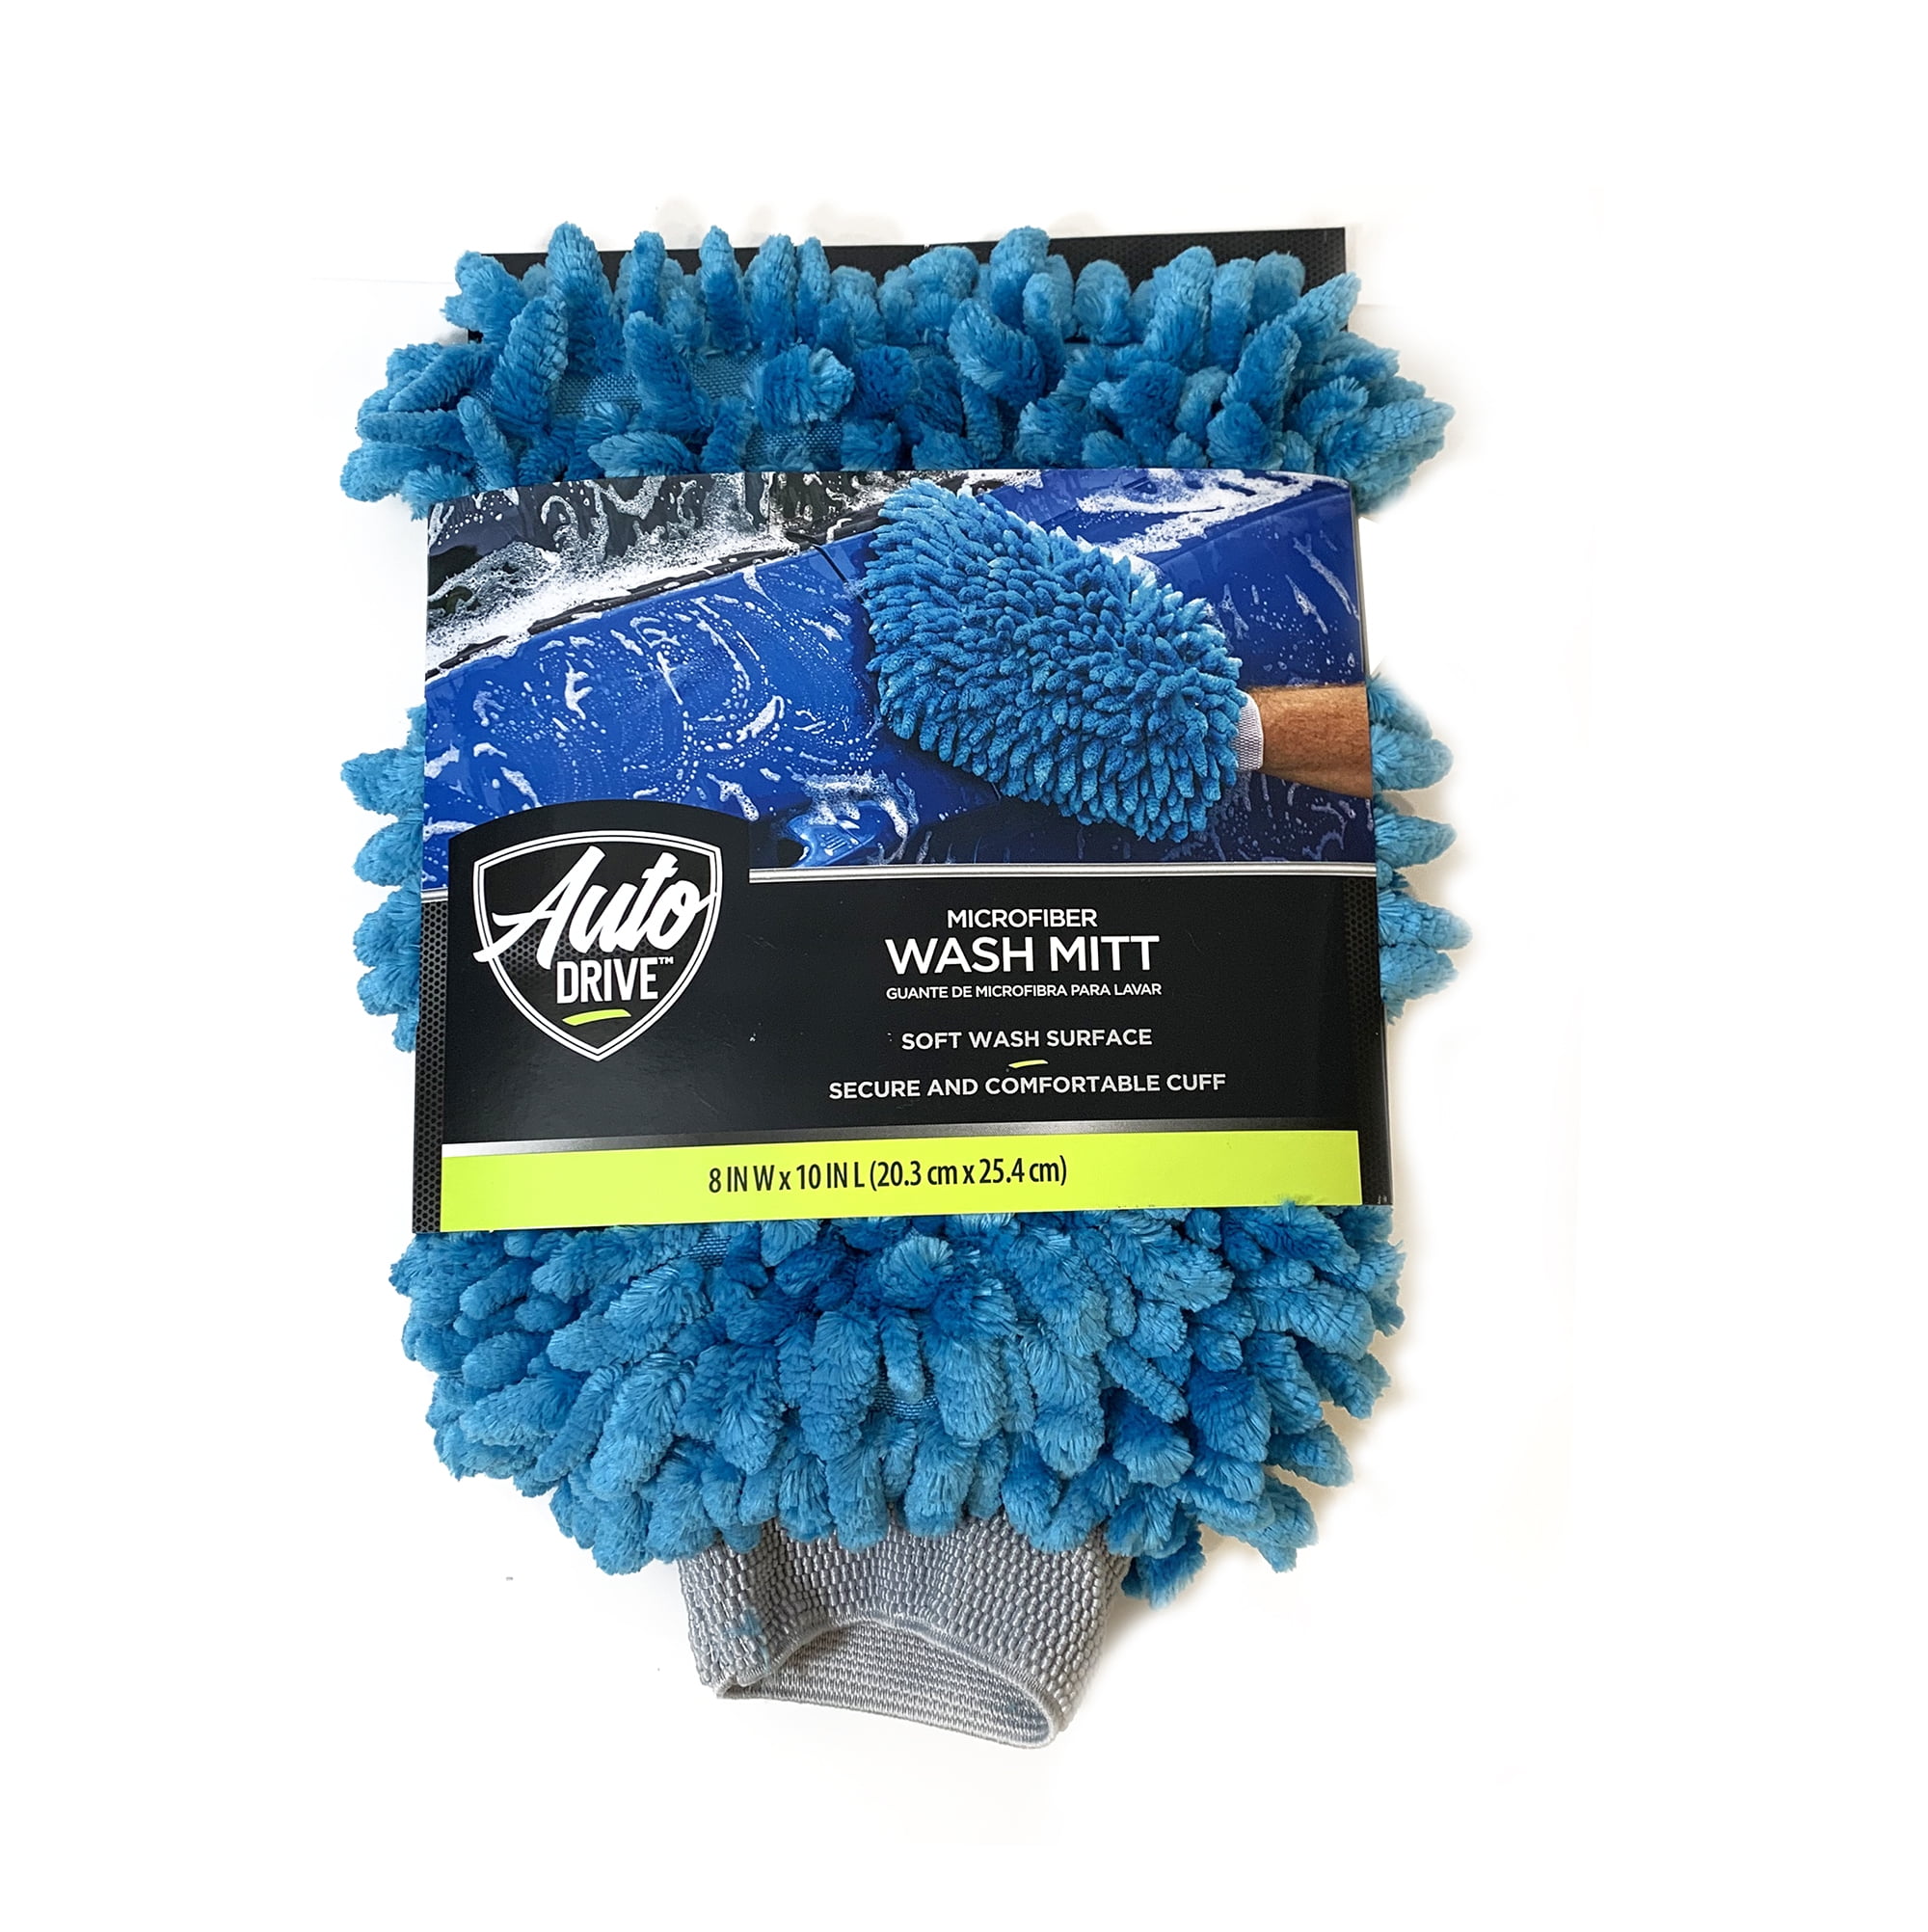 Car Wash Glove Chenille Coral Soft Microfiber Gloves